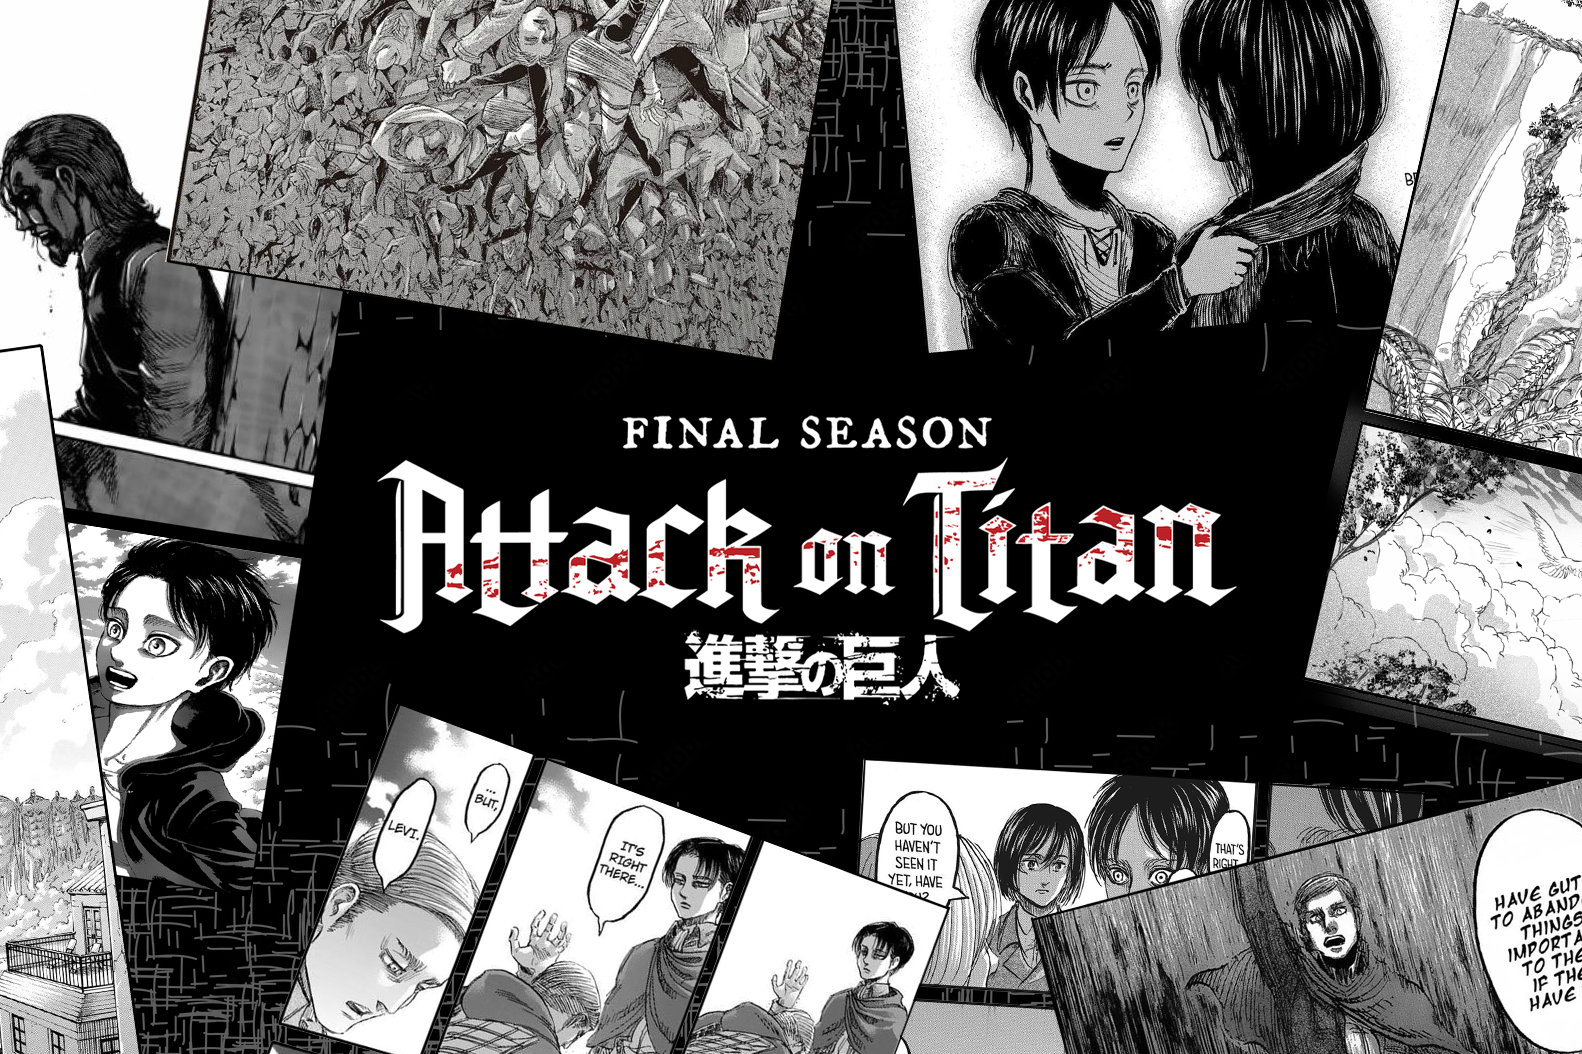 SACRIFICE YOUR HEARTS, THE FINAL BATTLE BEGINS! - Attack on Titan Final  Episode 1/2 